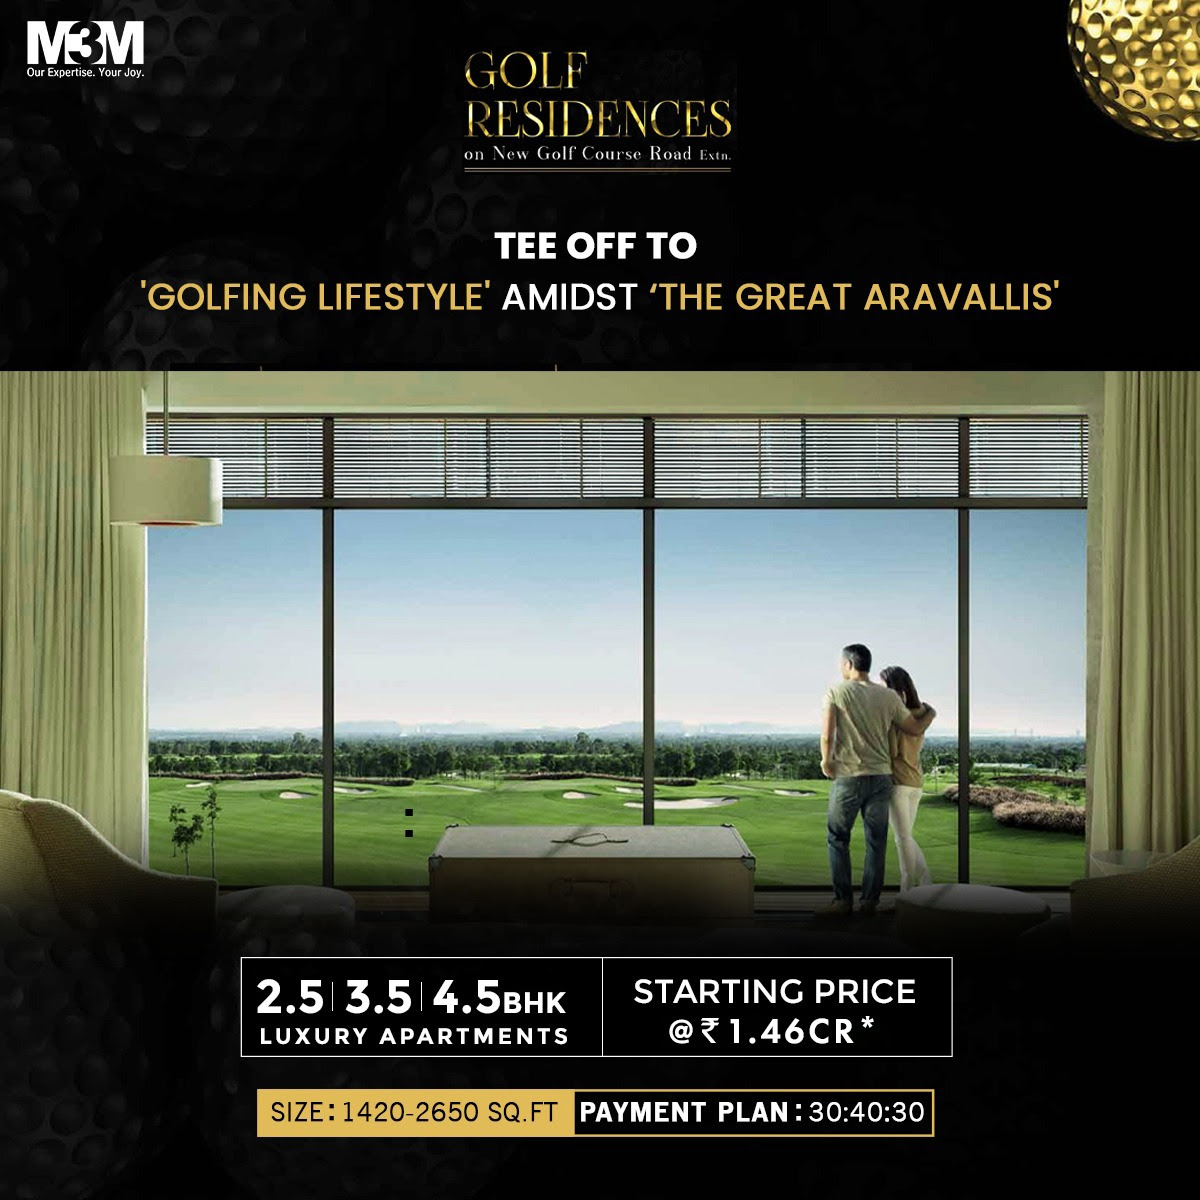 Presenting 30:40:30 payment plan at  M3M Golf Hills Phase 1, Gurgaon